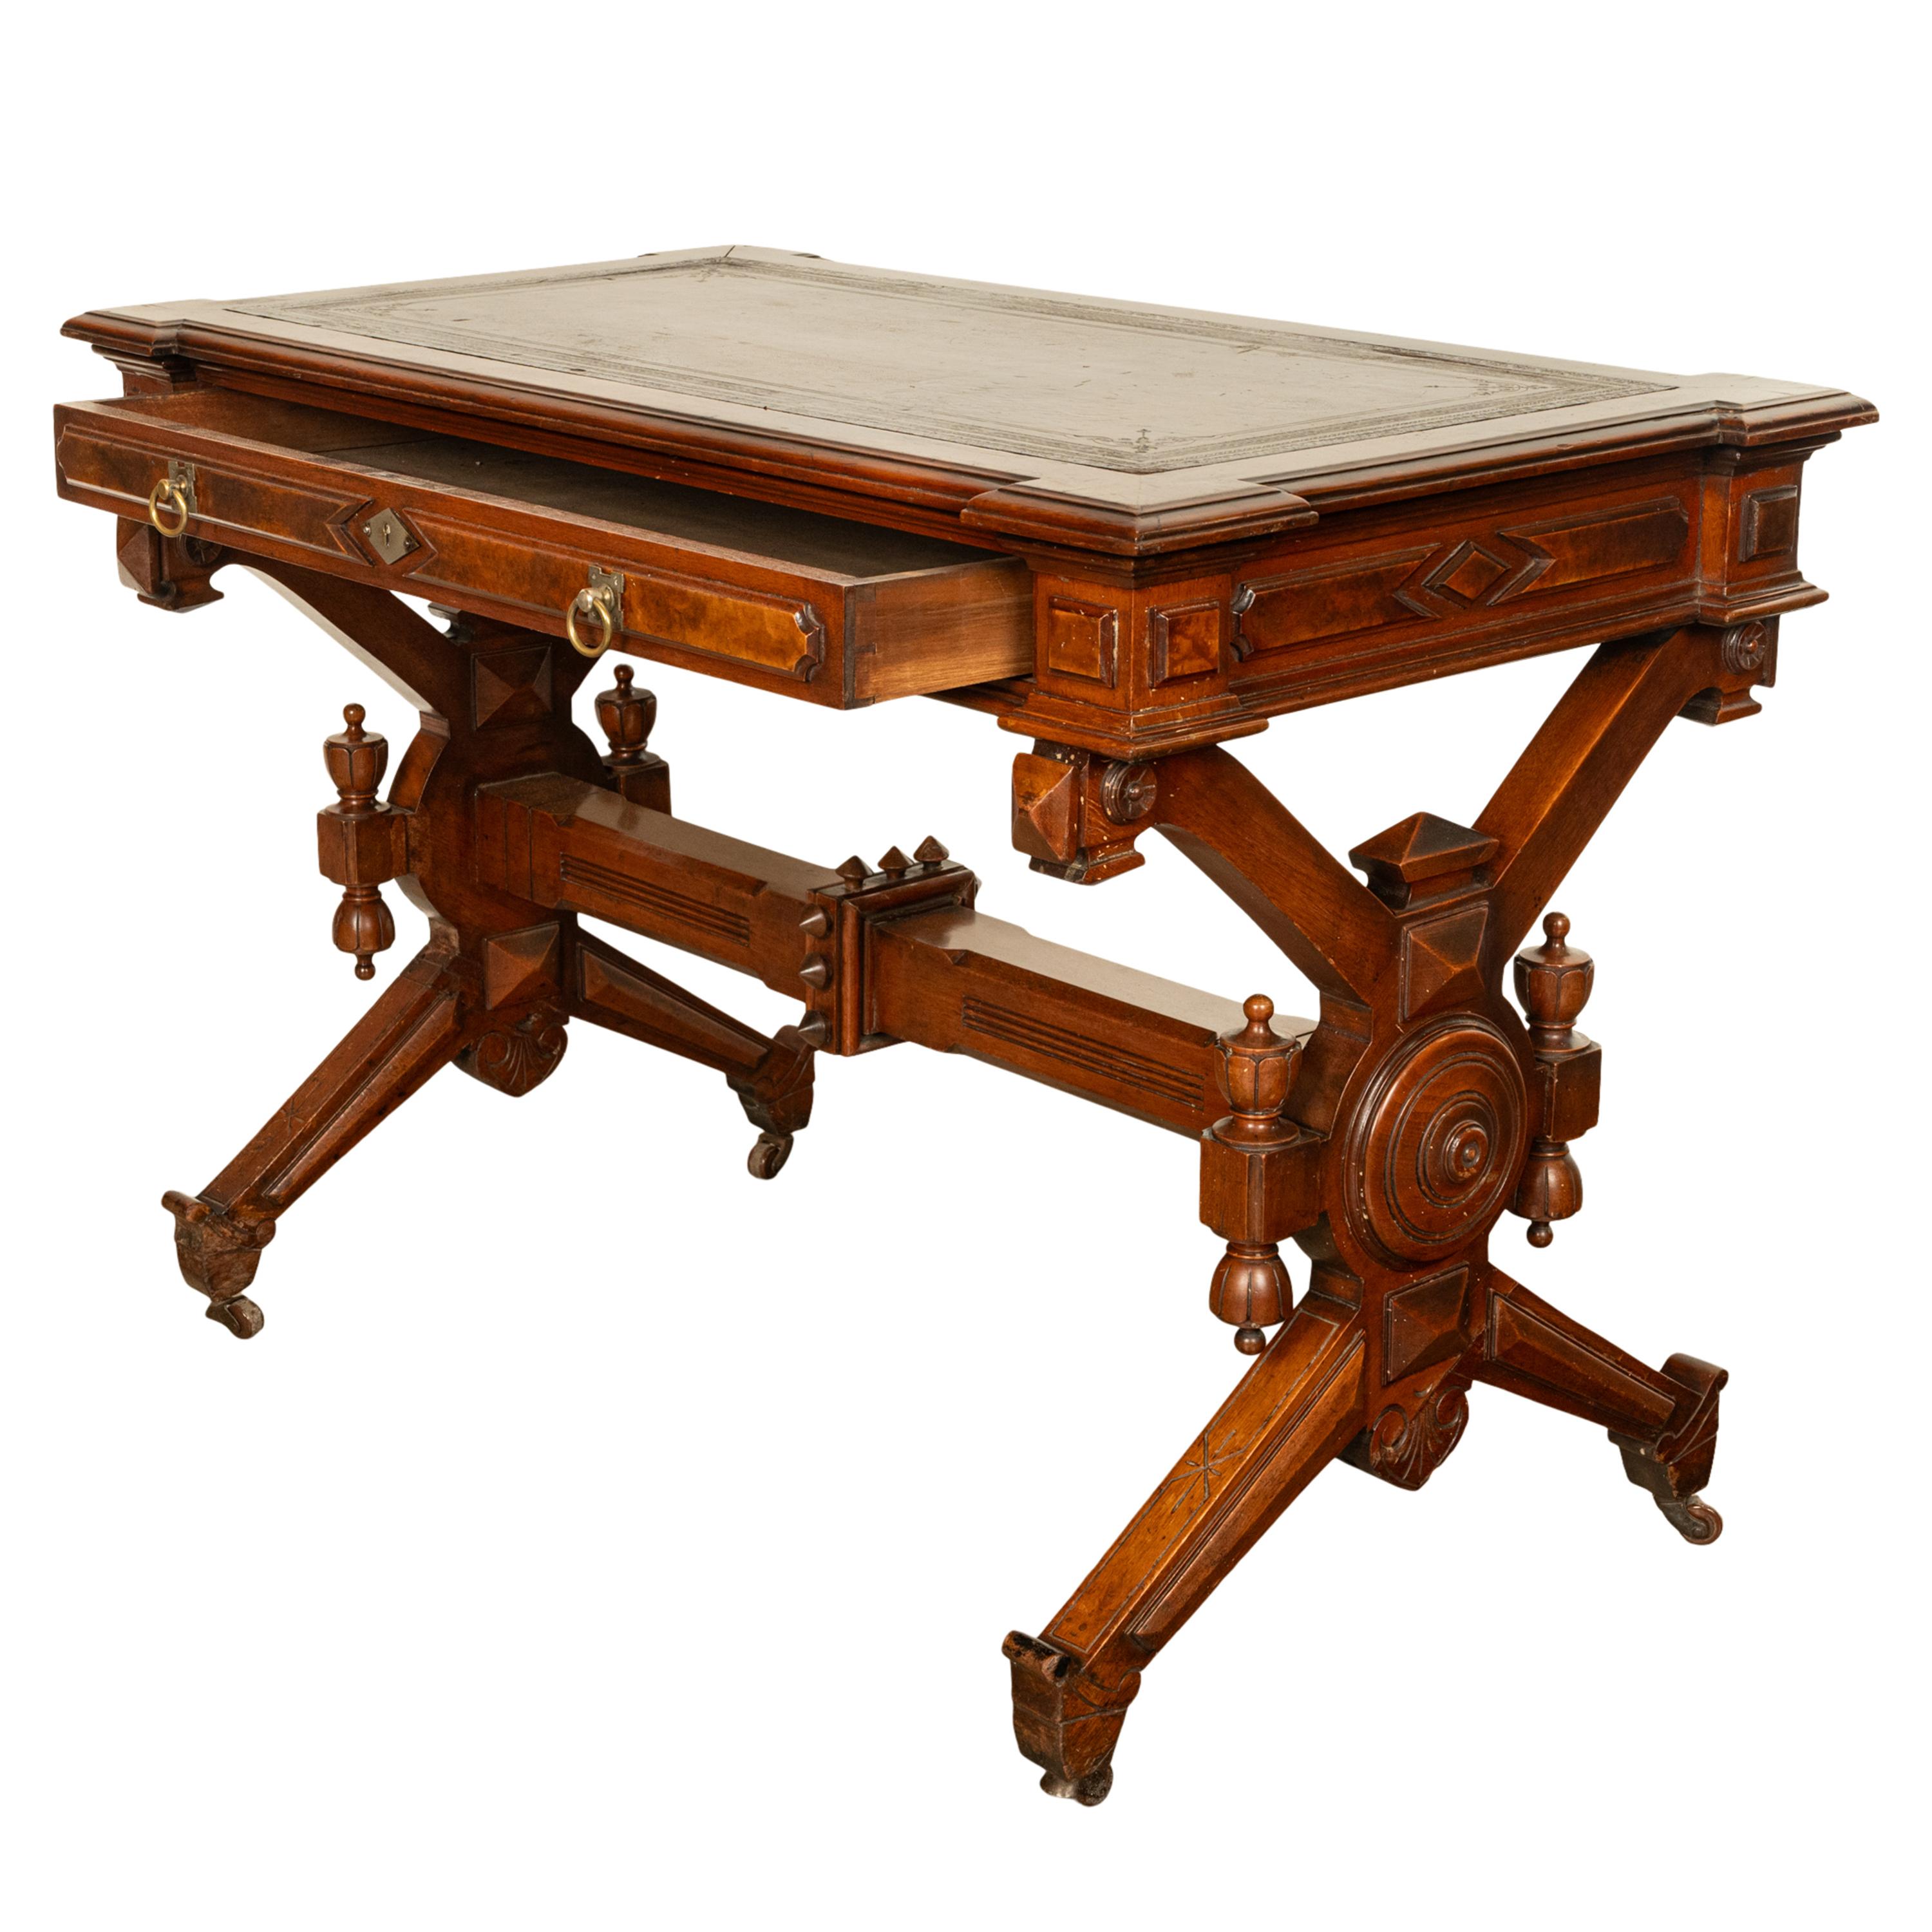 Leather Antique American Walnut Renaissance Revival Aesthetic Movement Desk Table 1875 For Sale